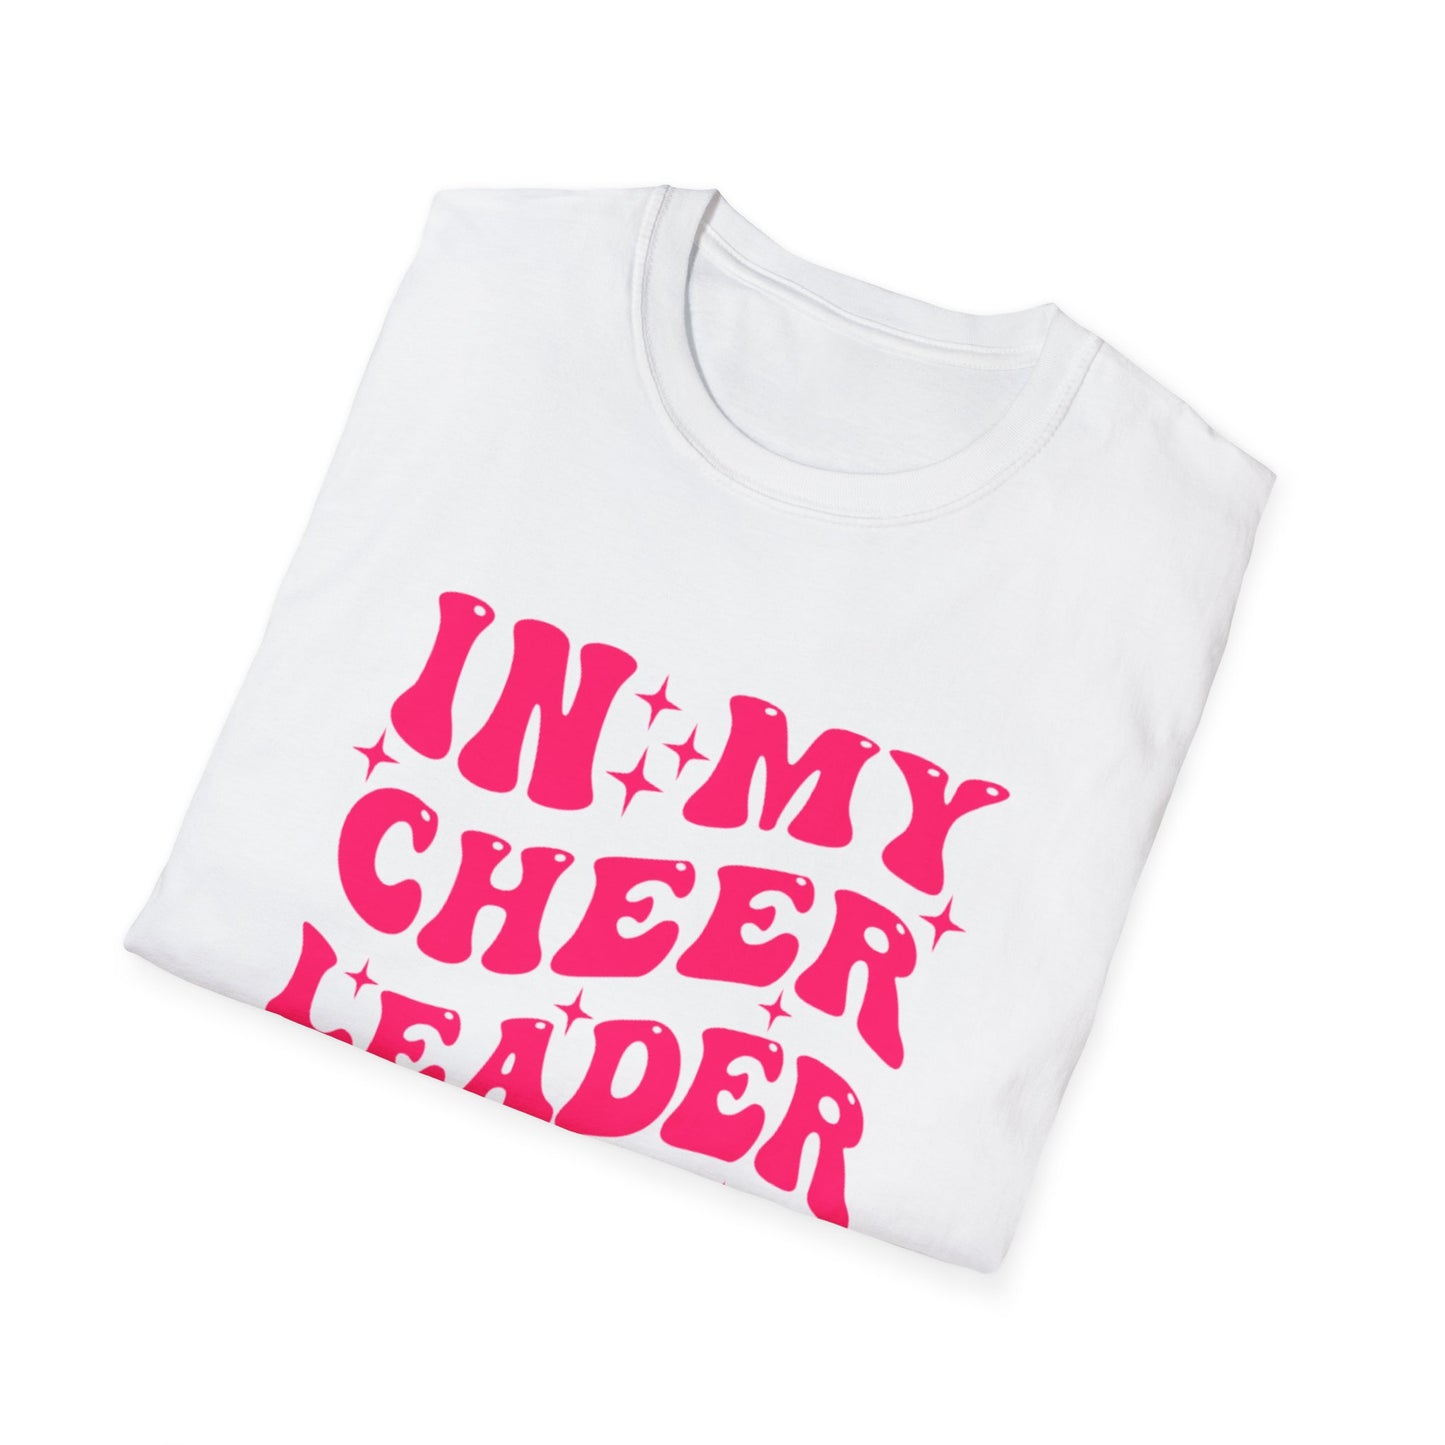 IN MY CHEER LEADER ERA SYA | Unisex T-Shirt